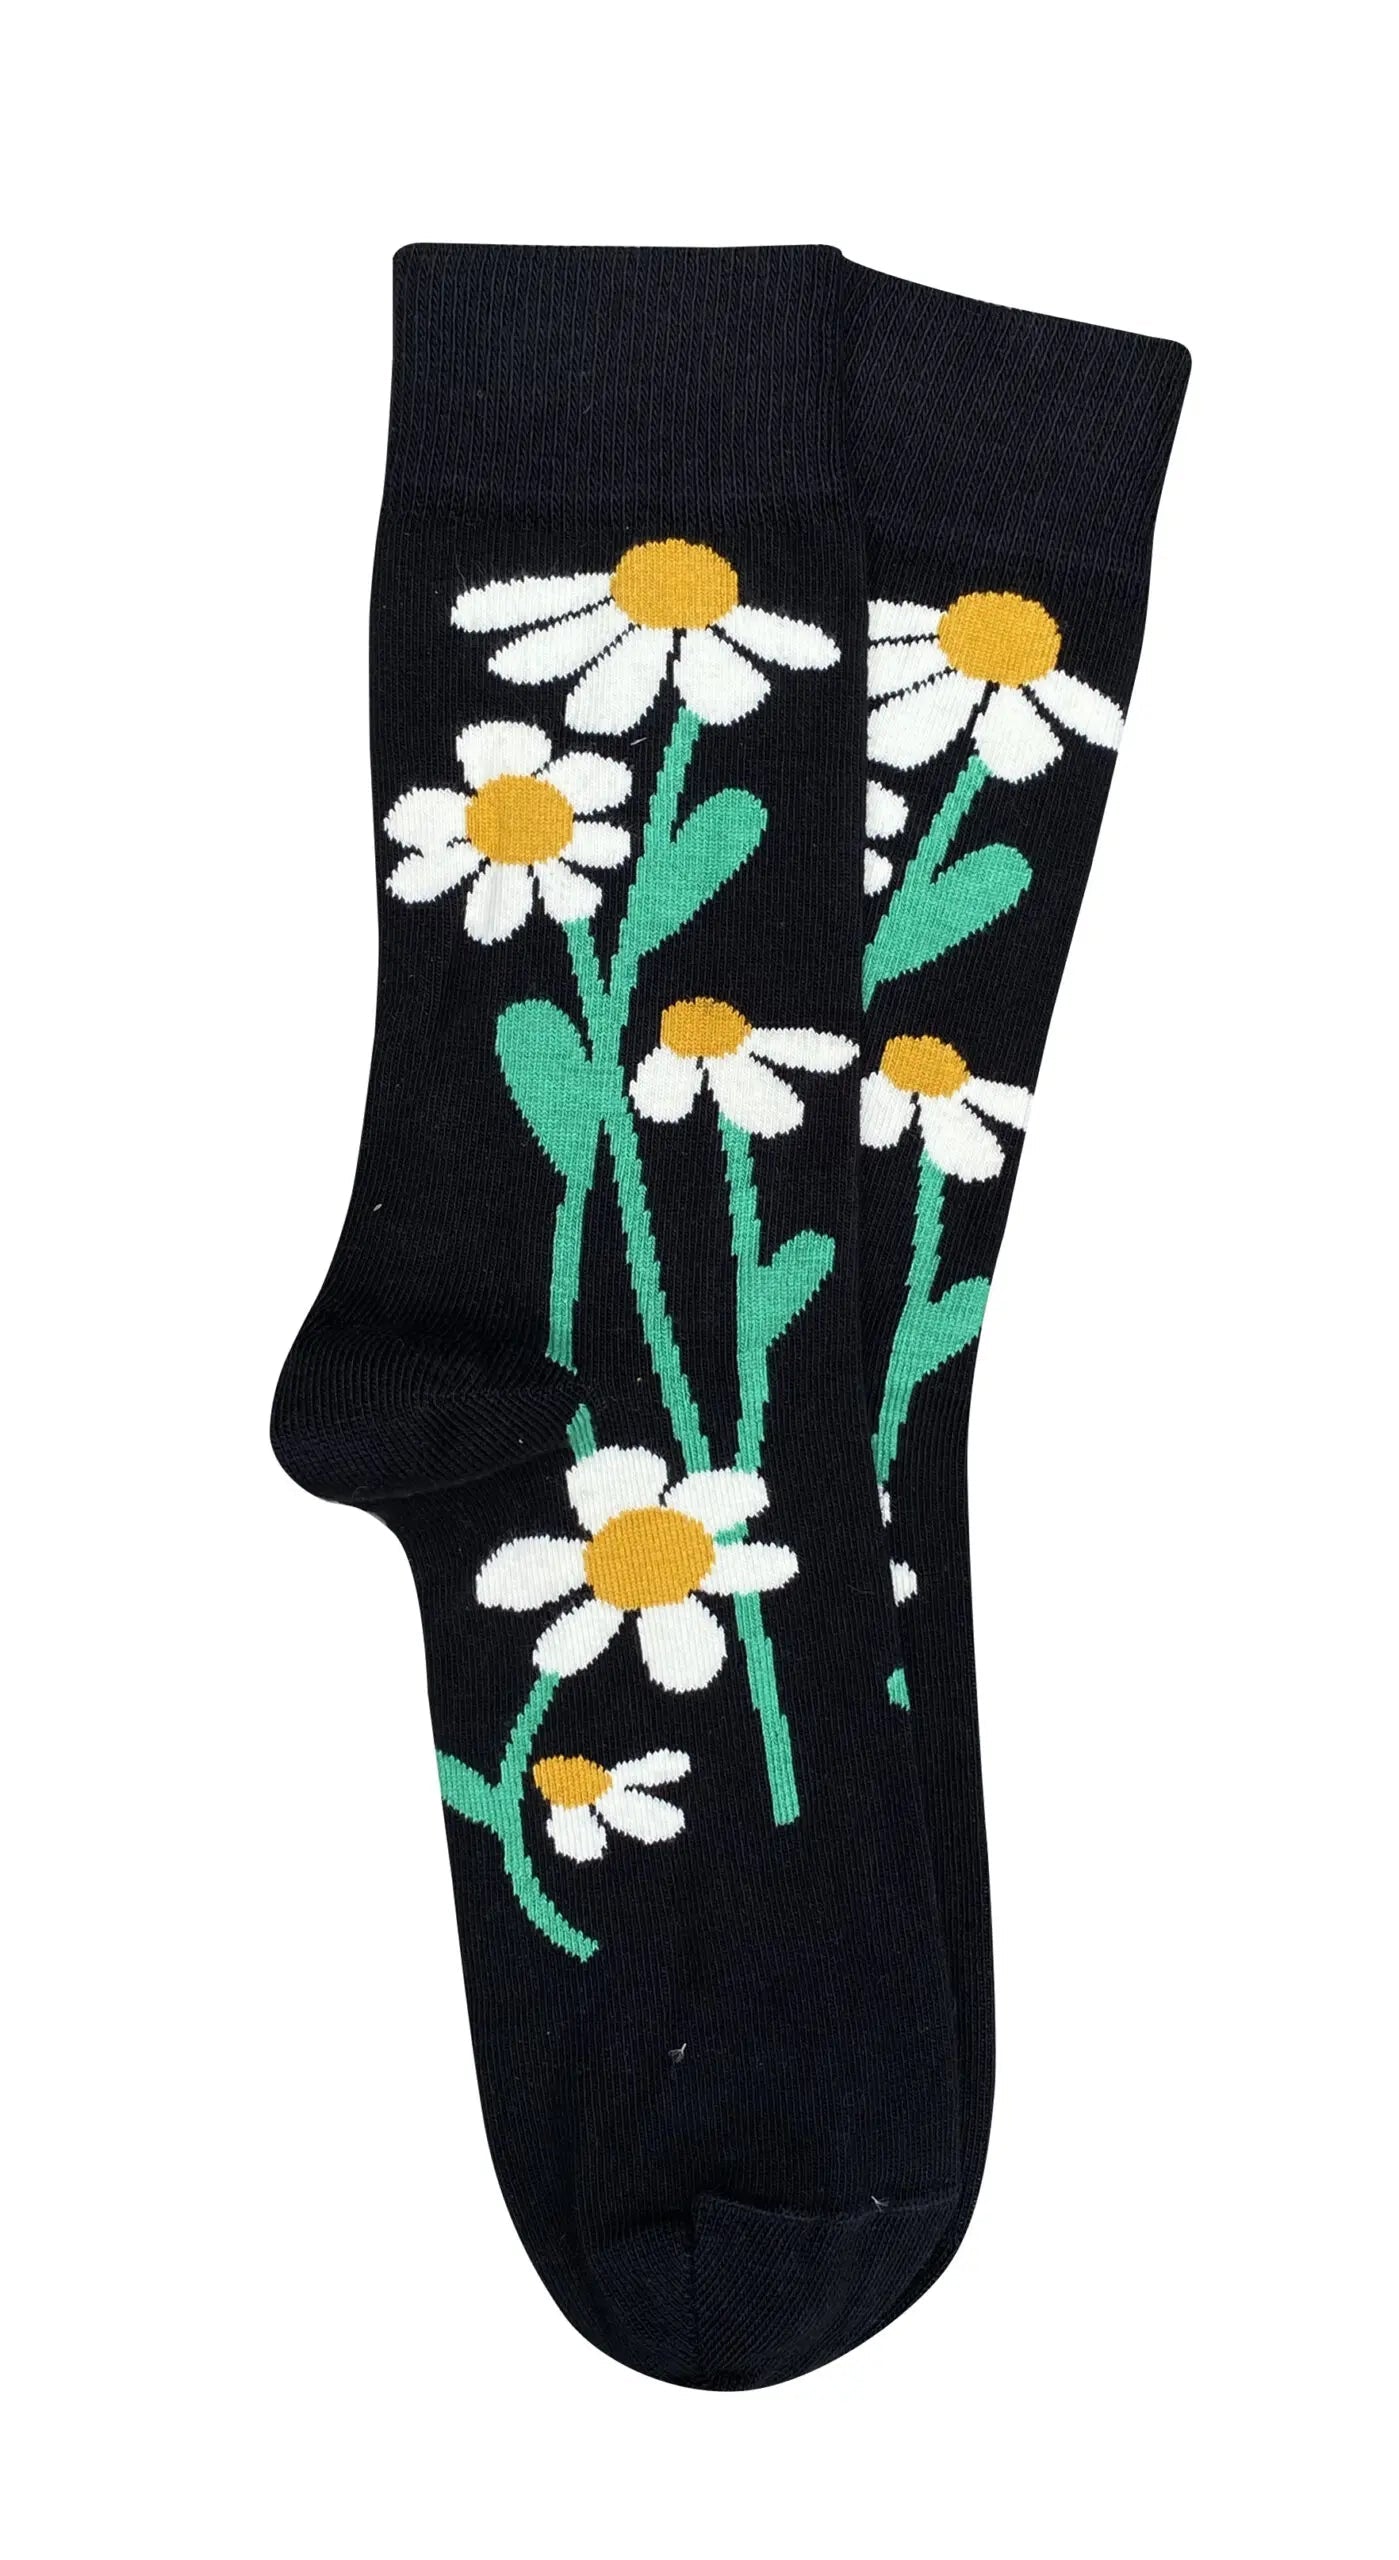 Fun Cotton Aussie Made Socks - Tightology socks Tightology Black One Size Daisy